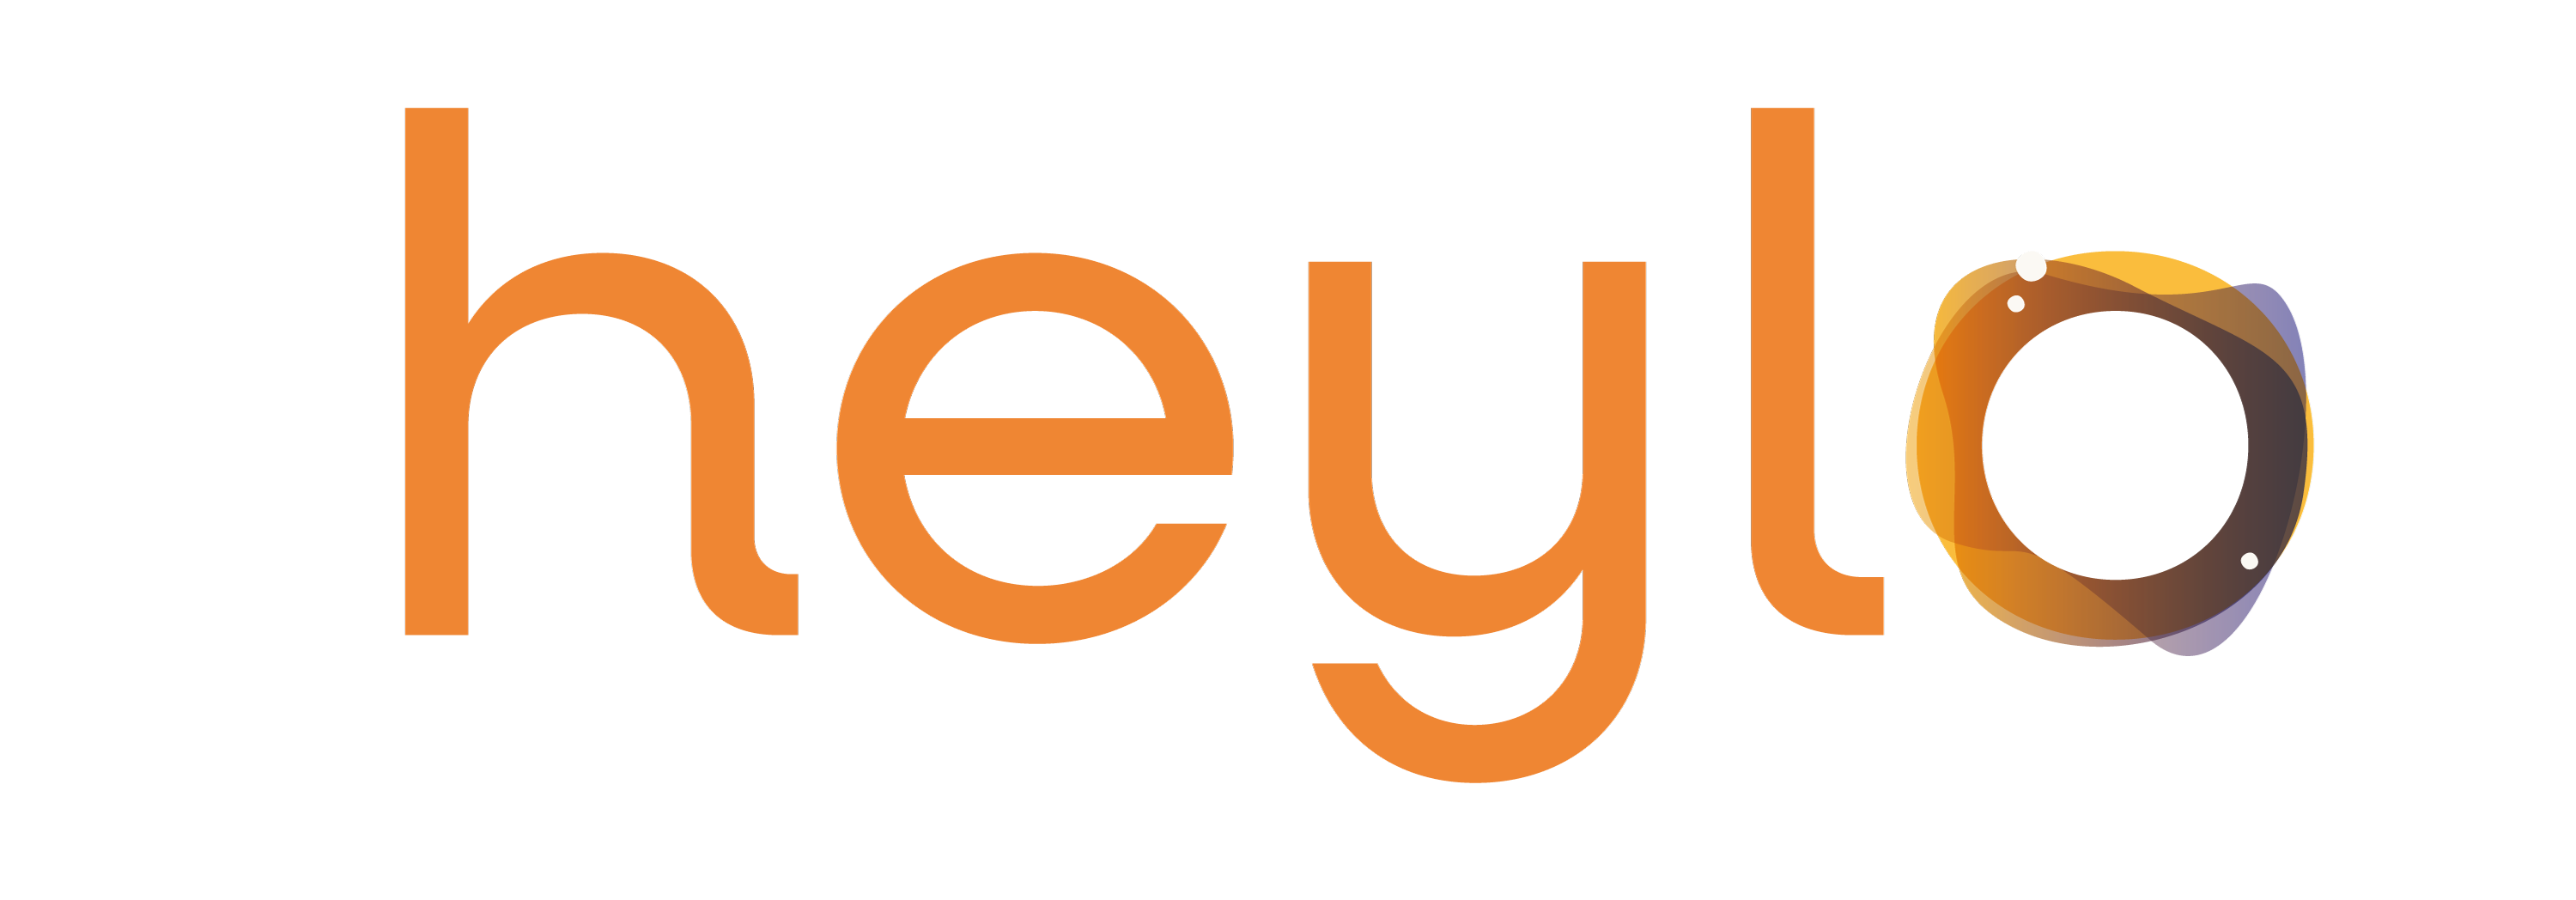 Heylo logo